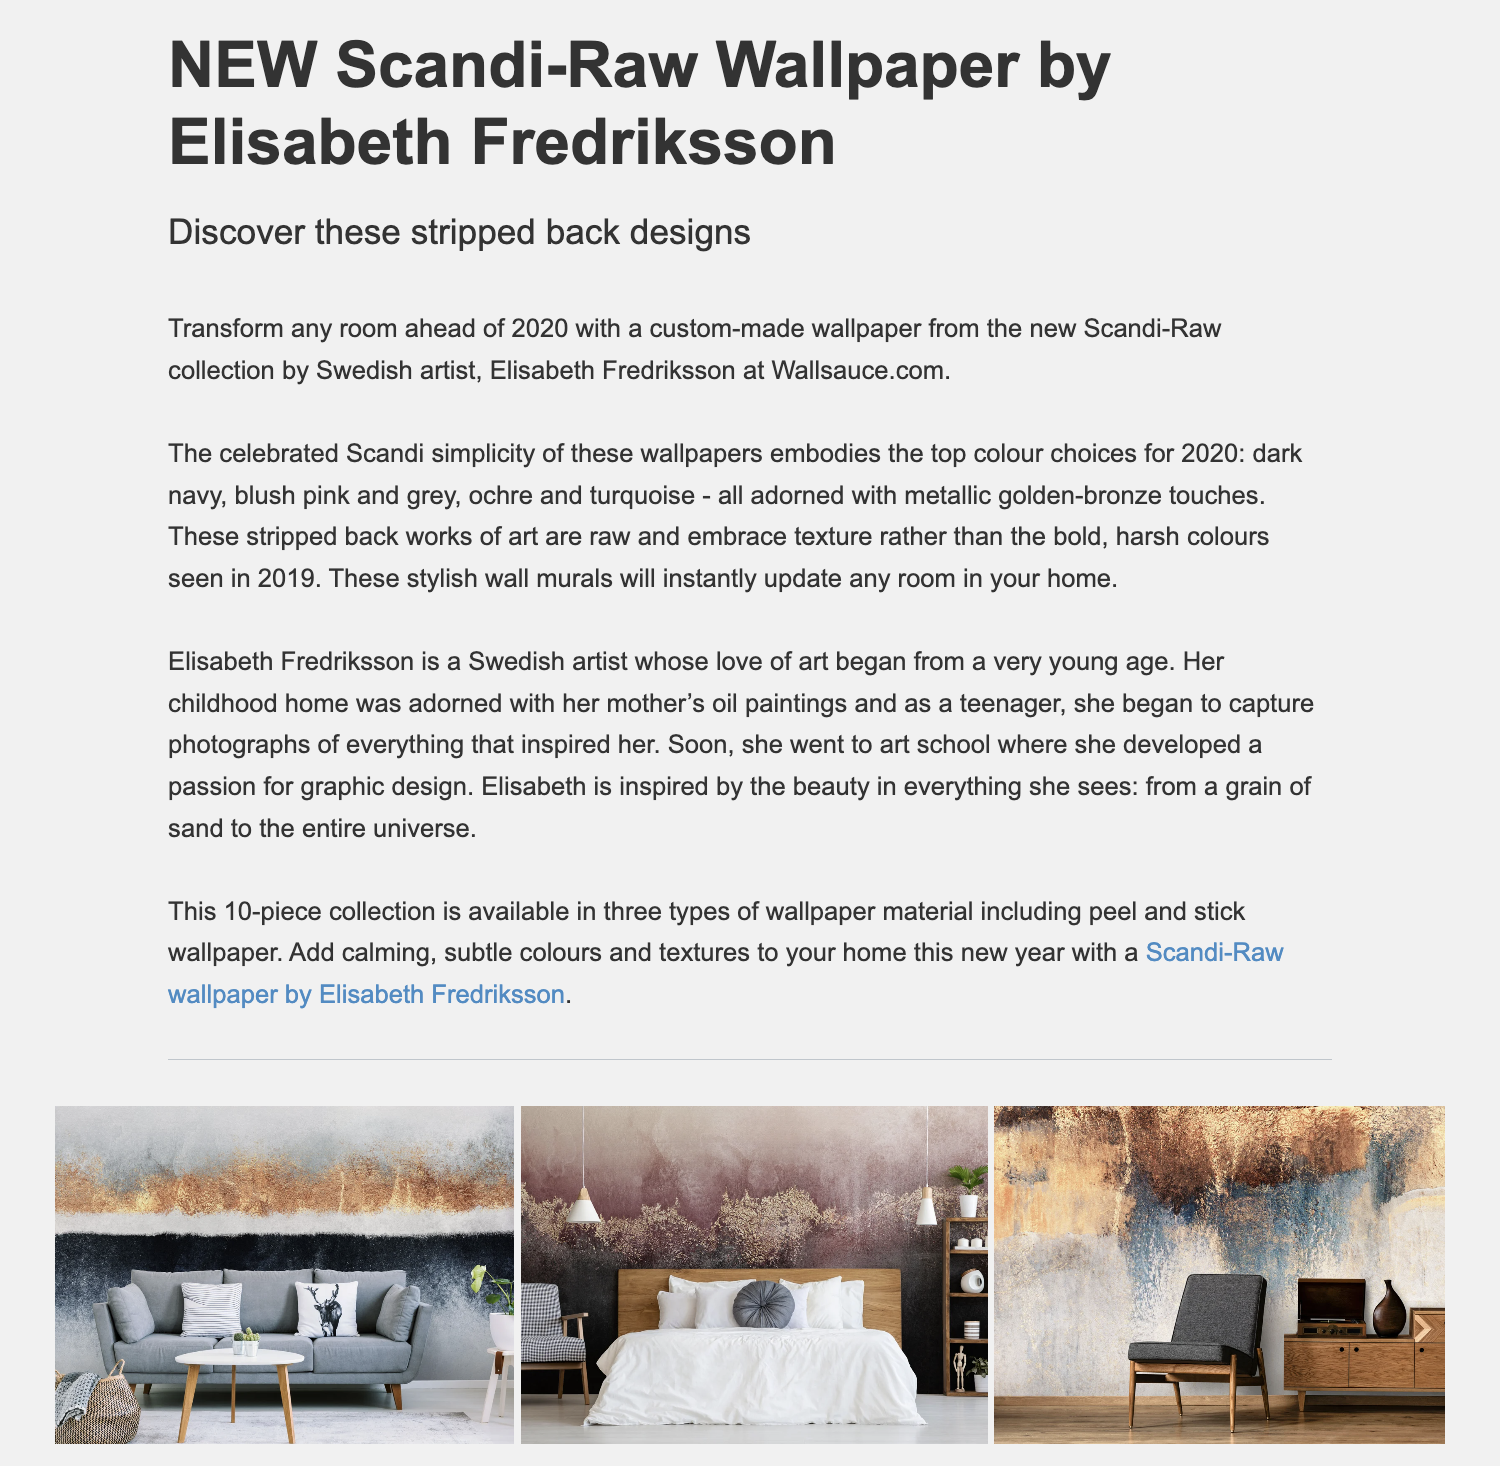 A press release from Wallsauce titled "NEW Scandi-Raw Wallpaper by Elisabeth Fredriksson"